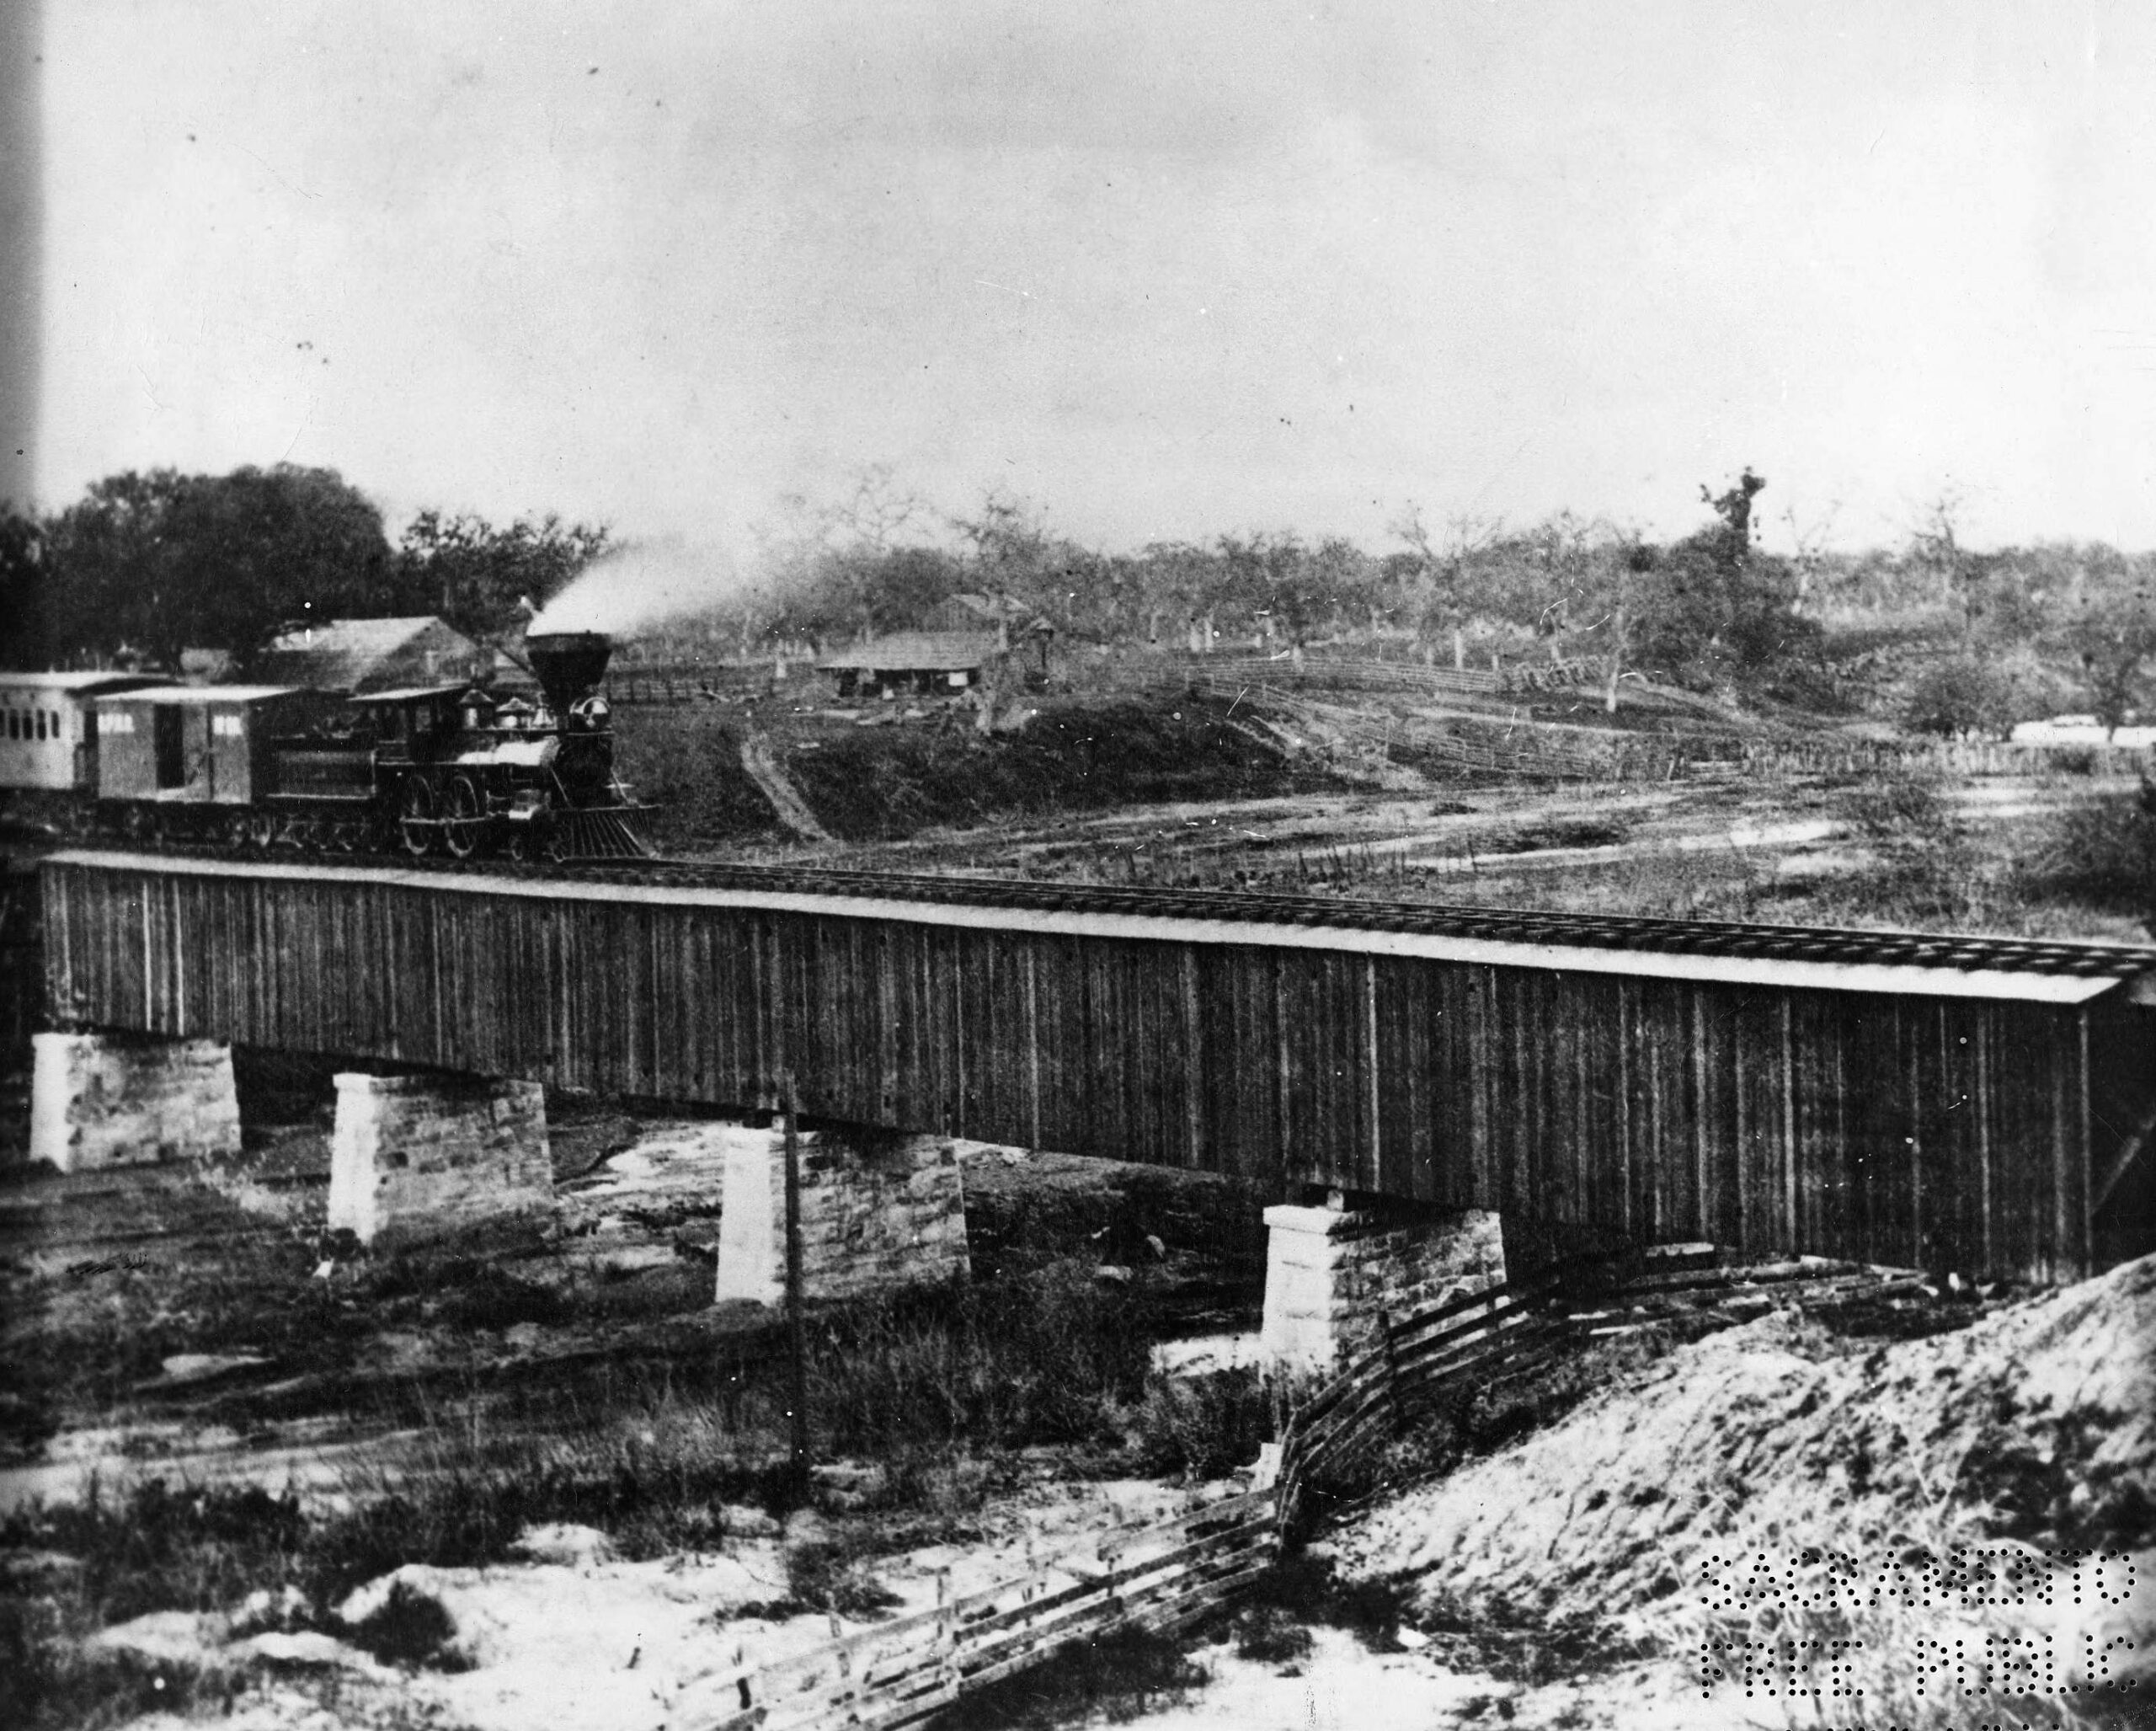 A Central Pacific Railroad train of the Dry Creek Bridge, located 17 miles east of Sacramento, 1865